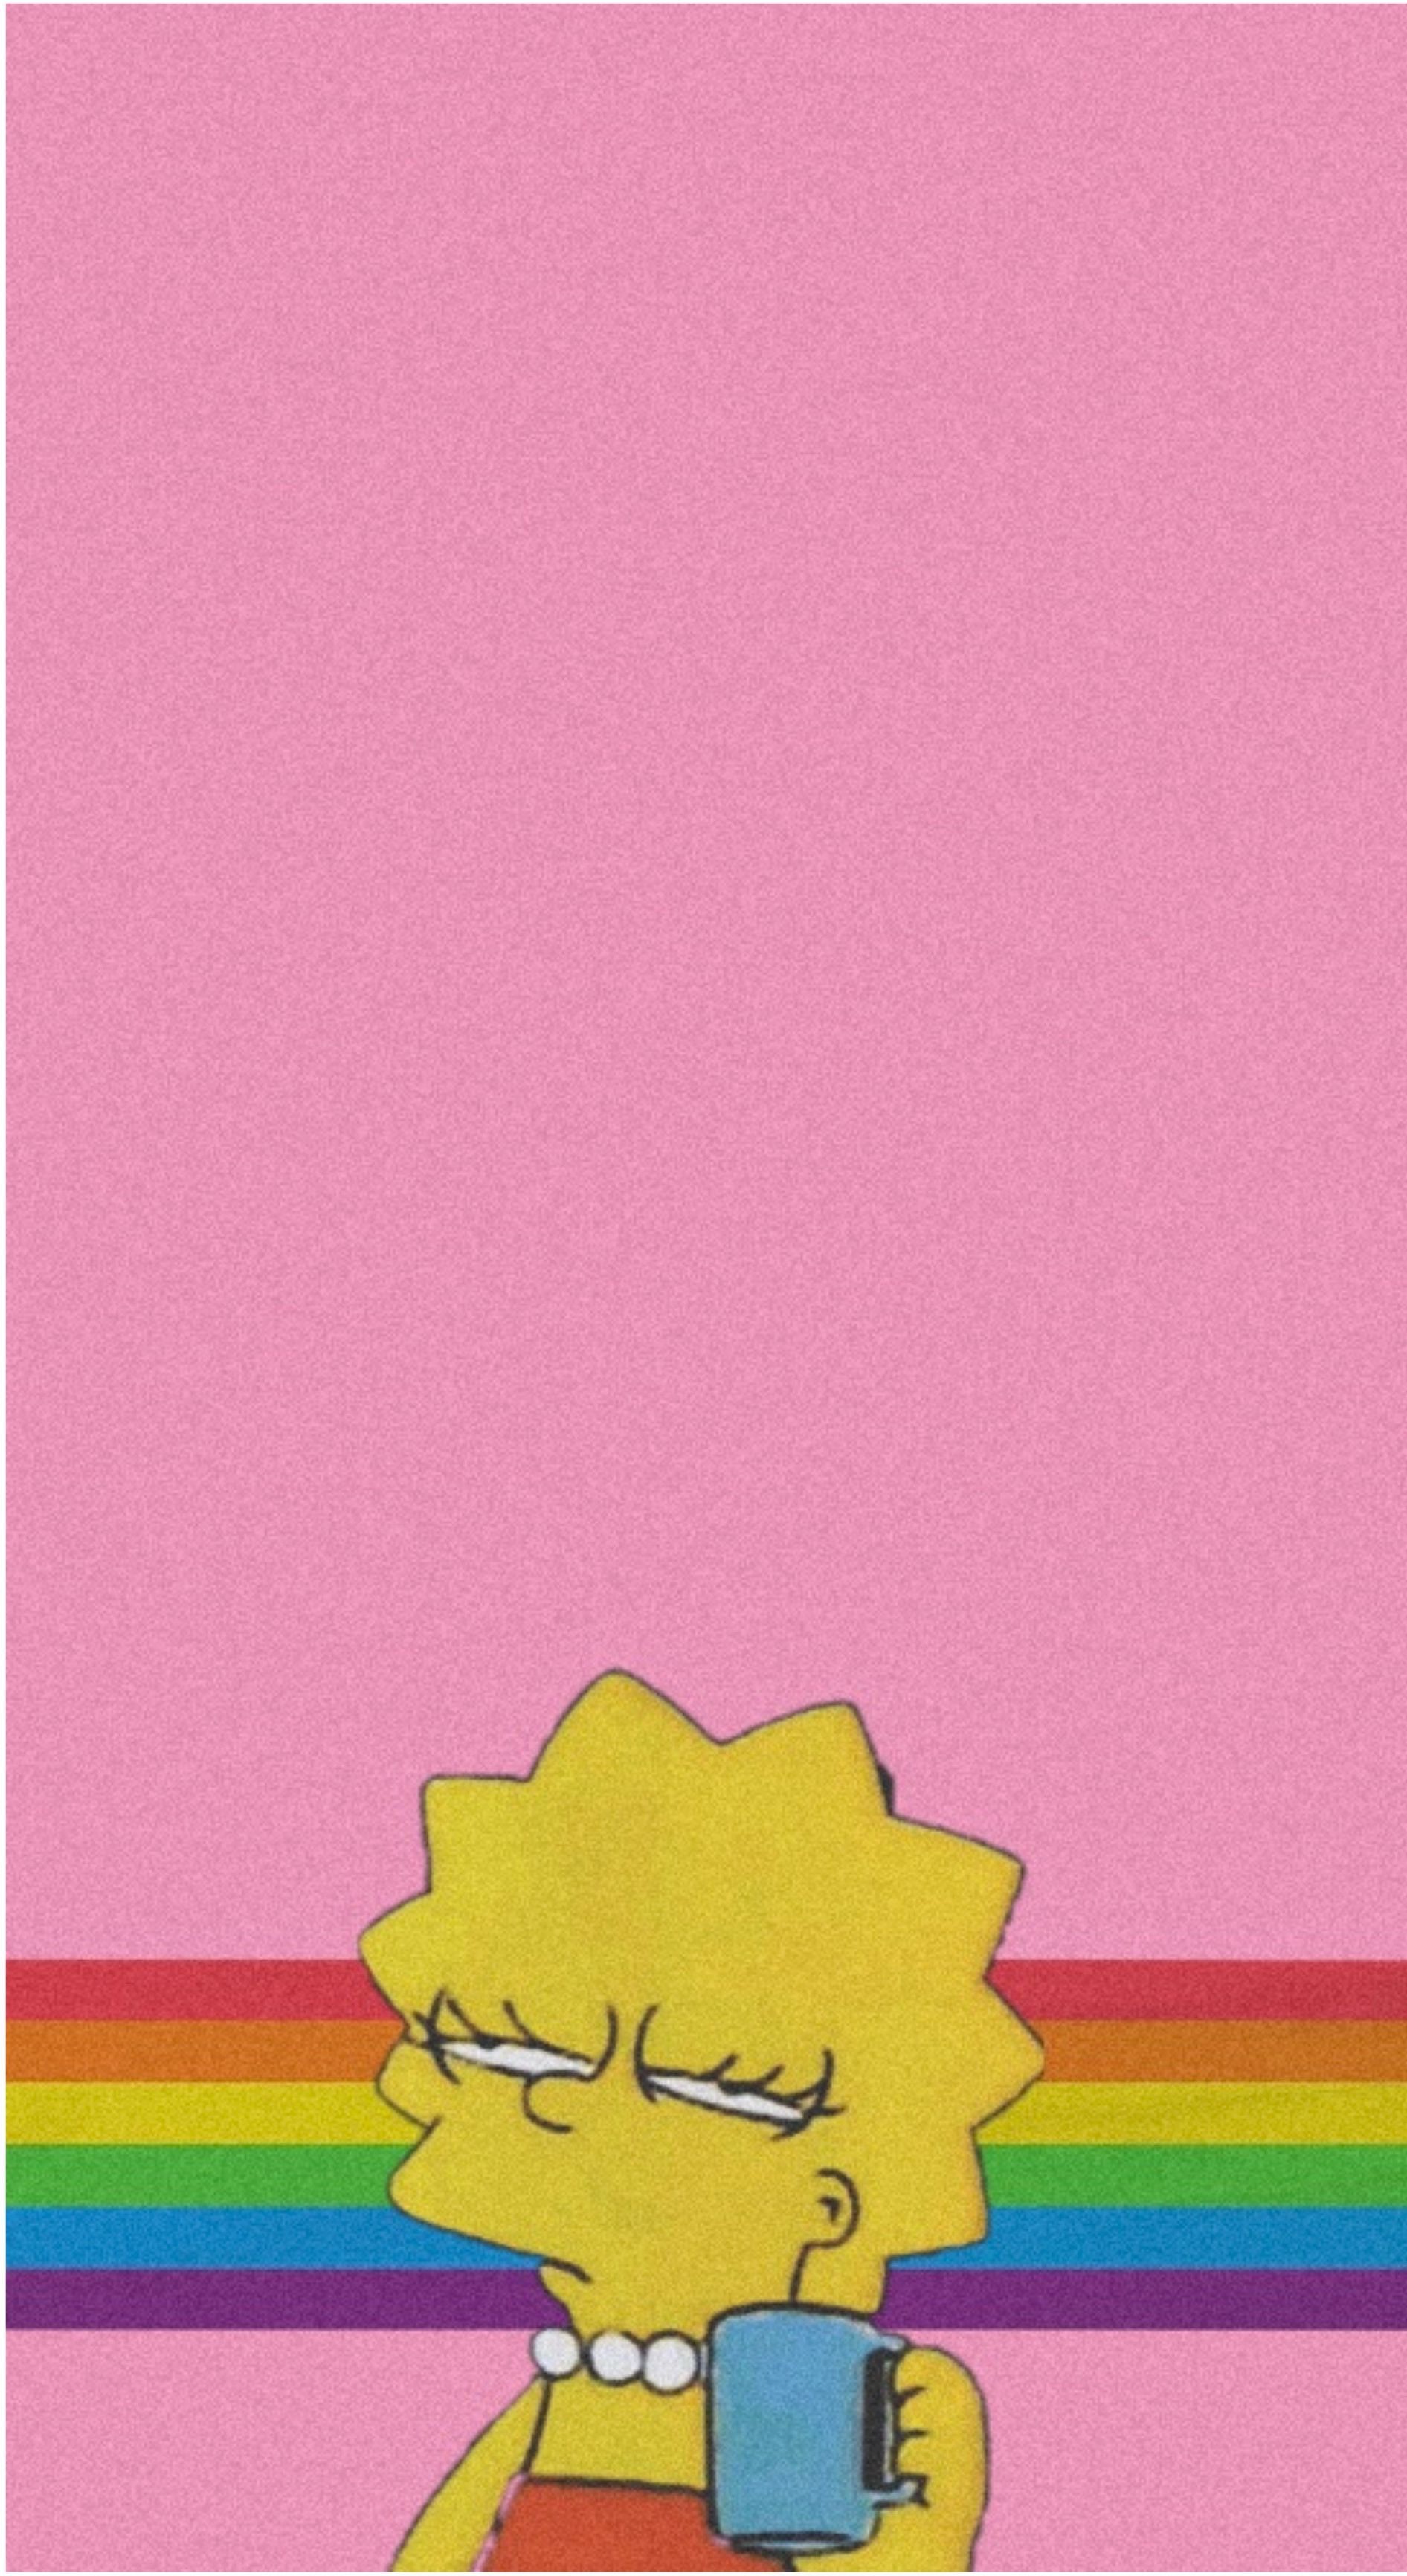 Lisa Simpson wallpaper for your phone - Lisa Simpson